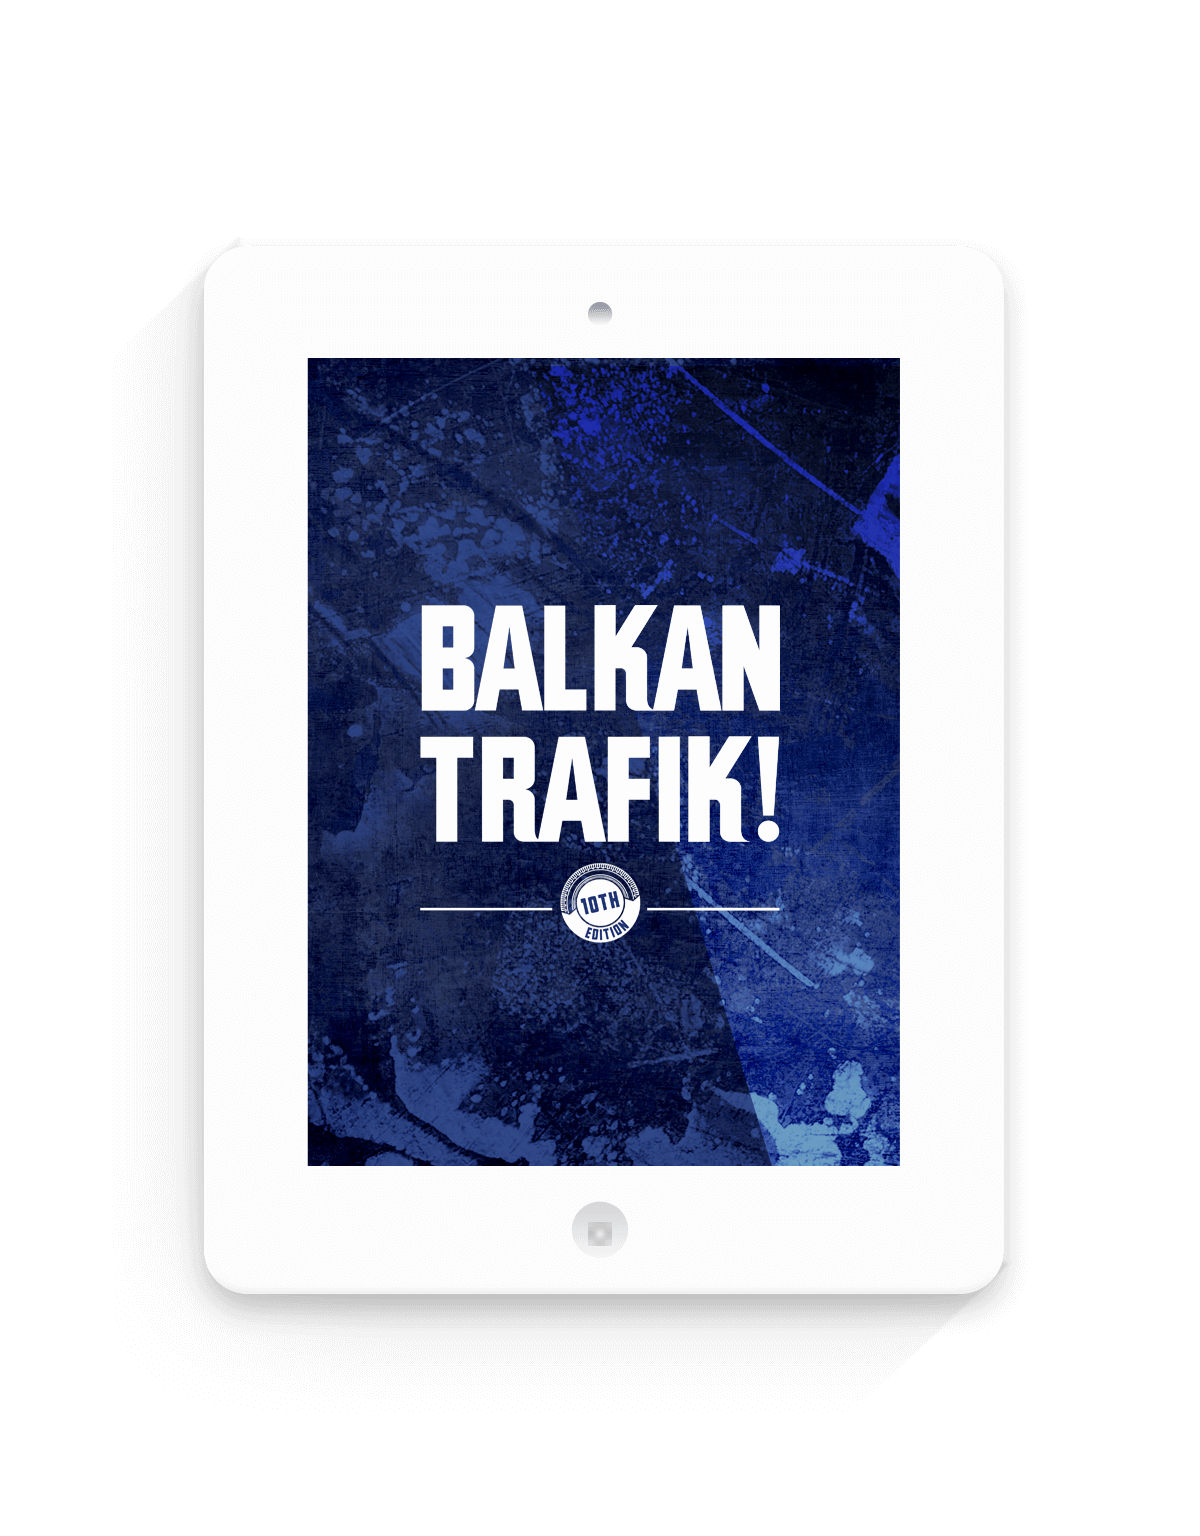 Balkan Trafik festival